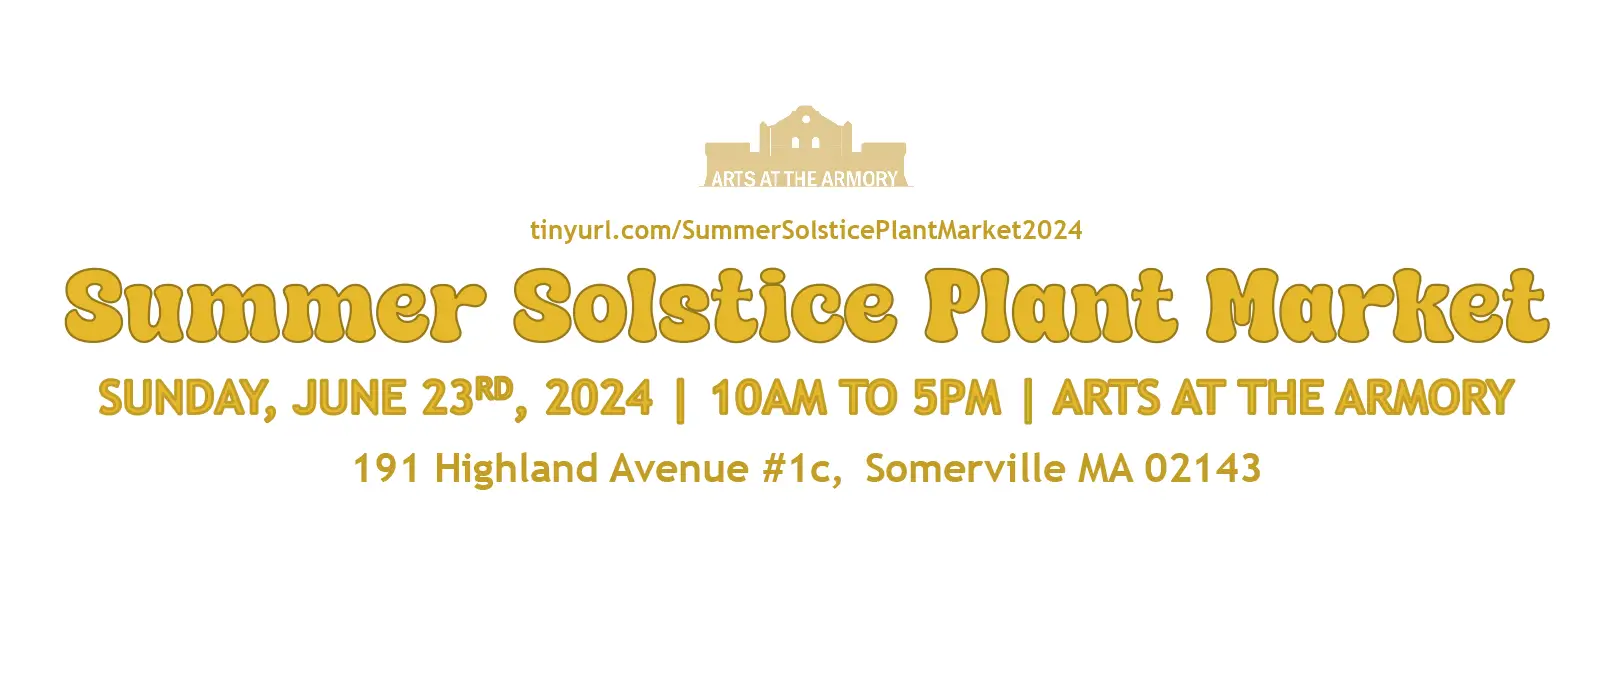 Summer Solstice Plant Market